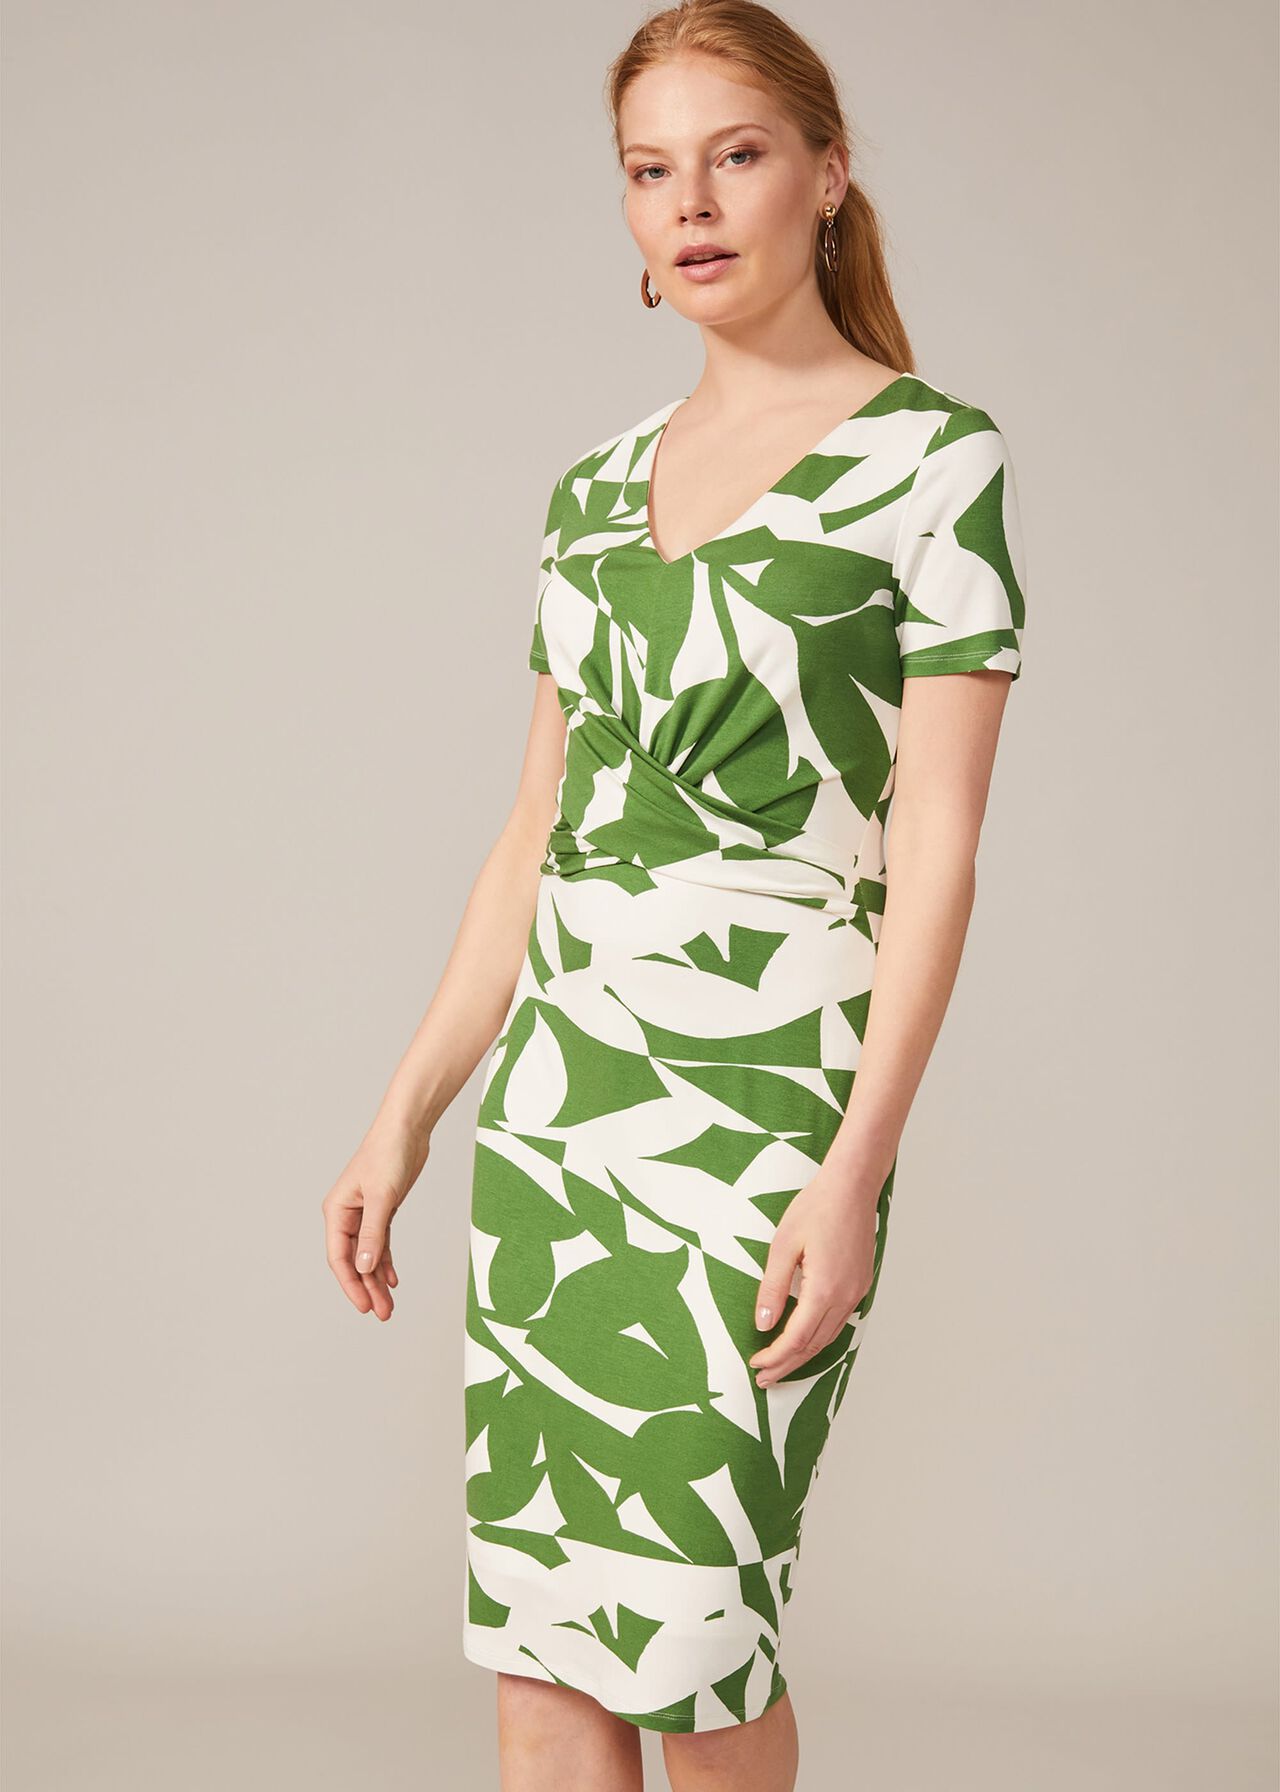 Gladys Leaf Print Jersey Dress